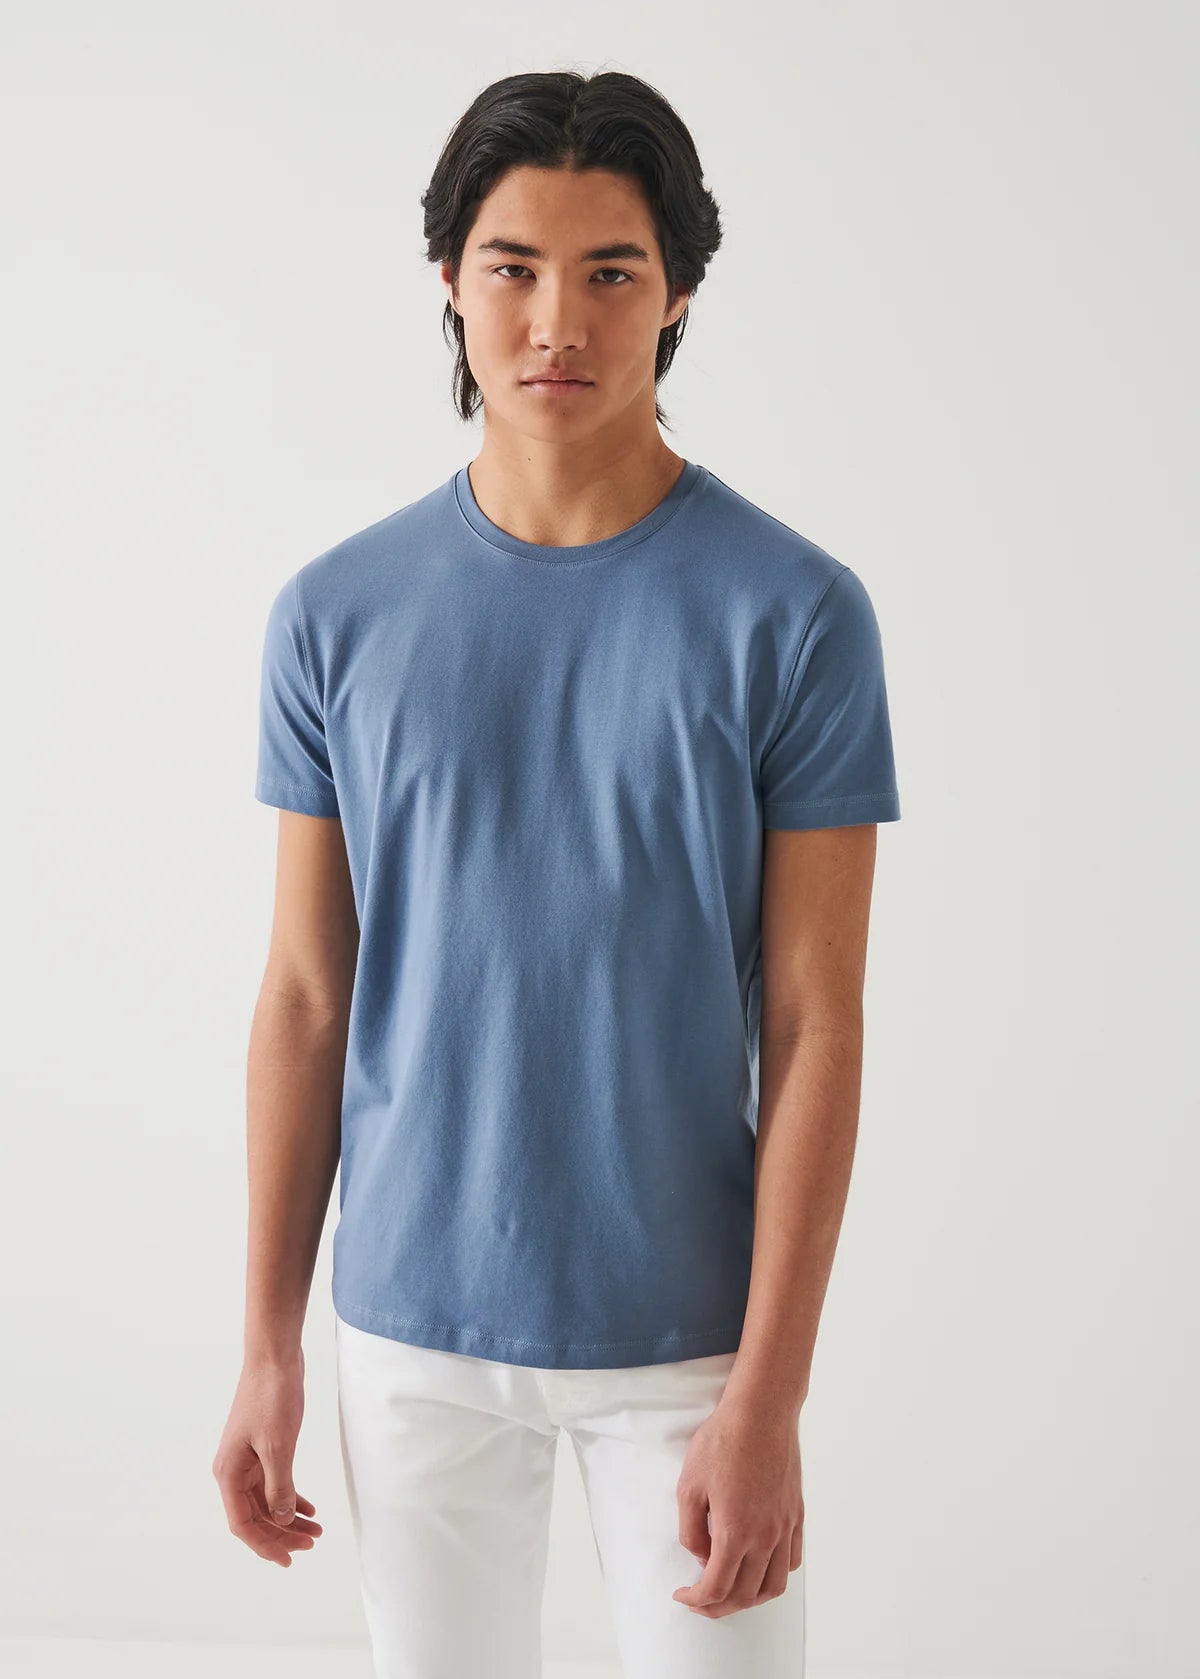 Patrick Assaraf Iconic Pima Cotton Stretch T-Shirt in Blue Steel